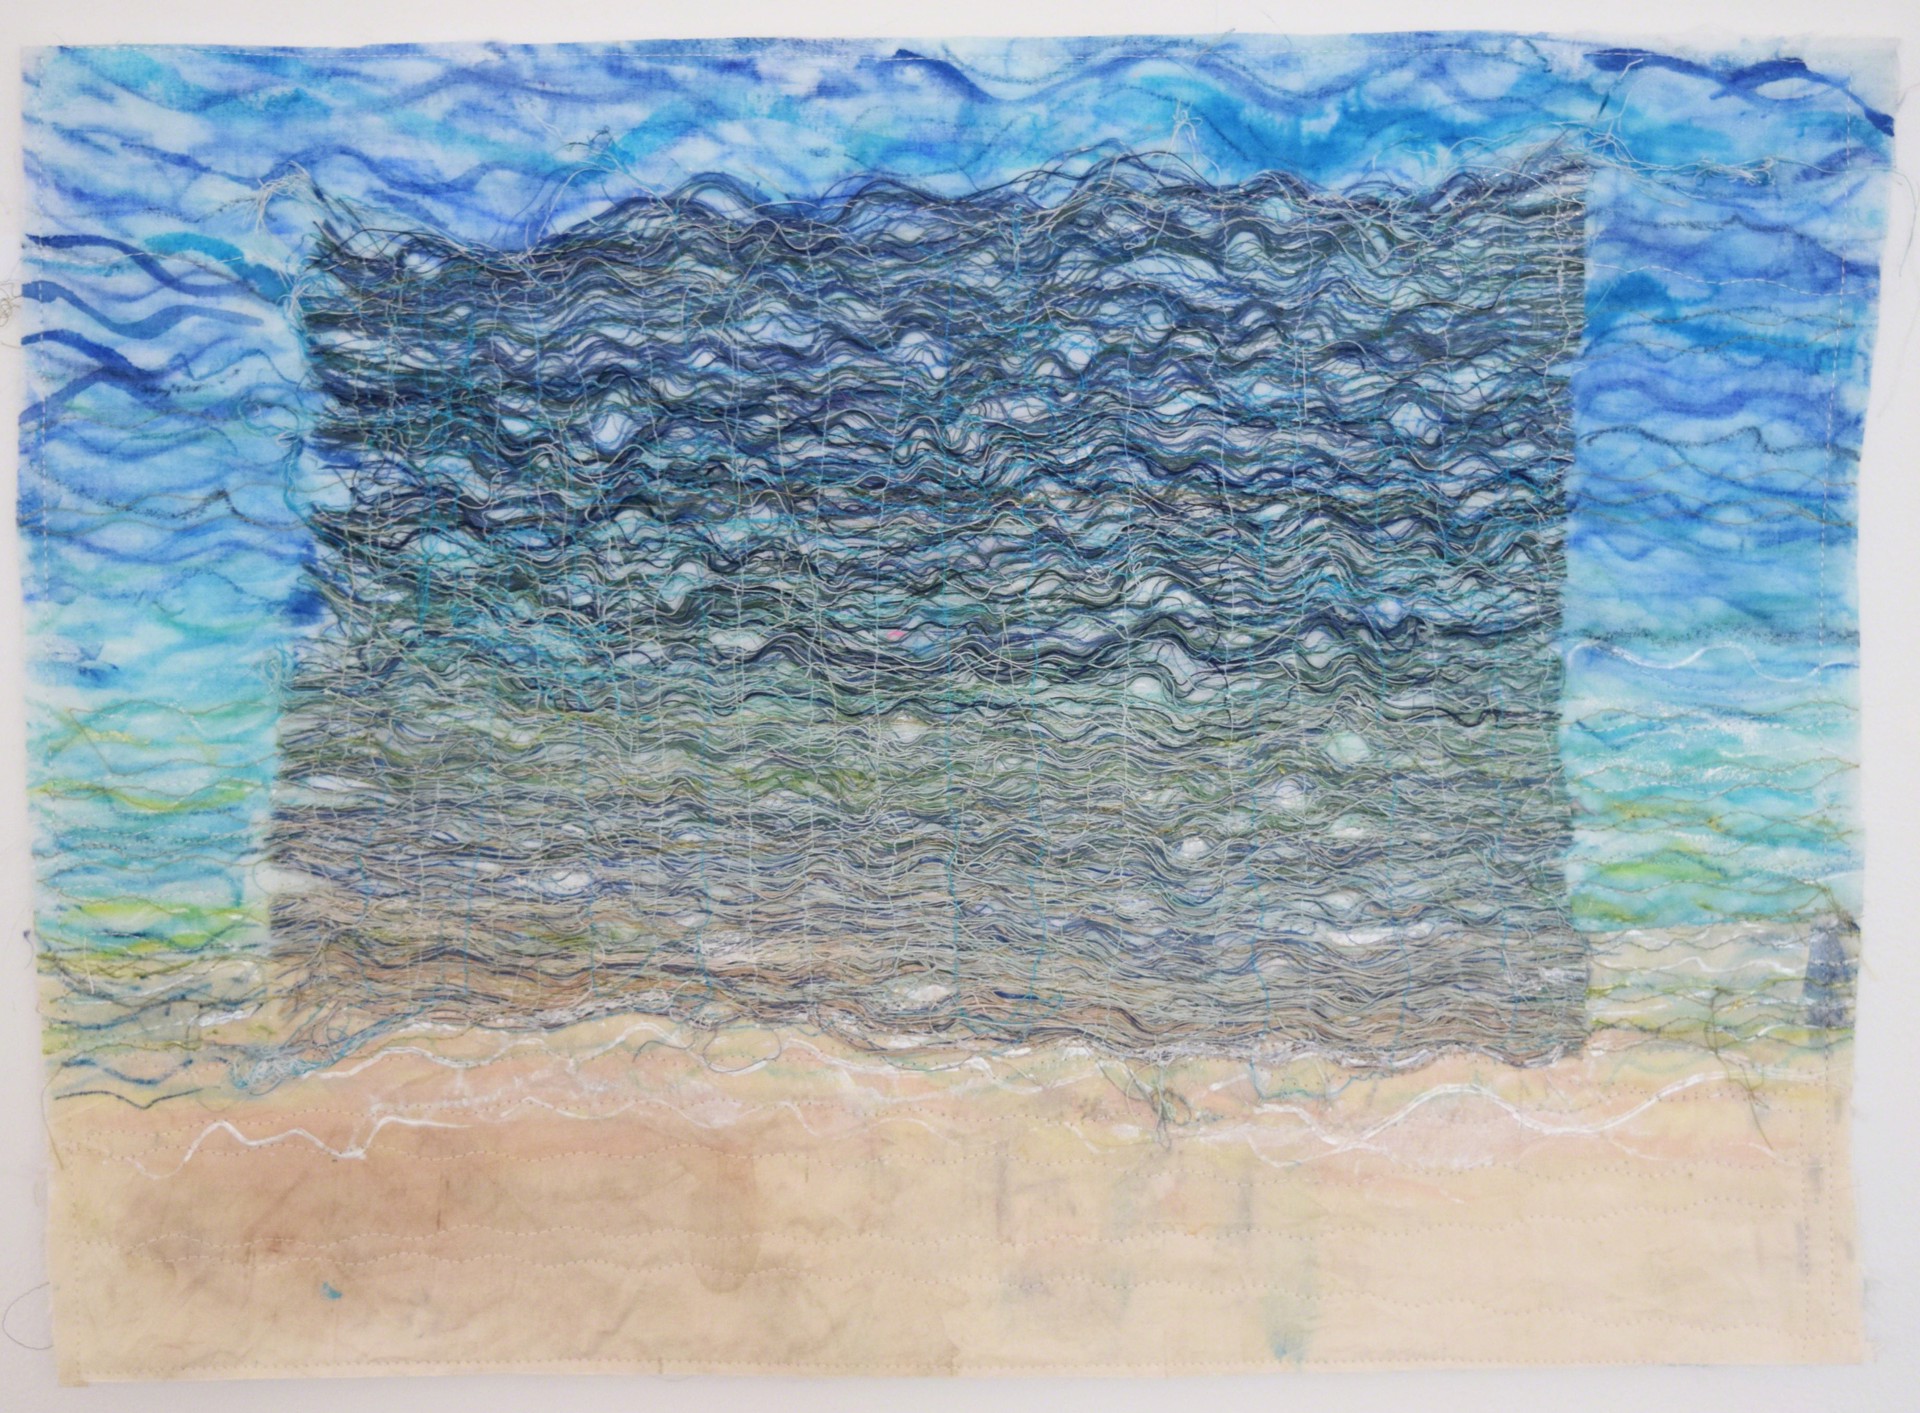 Threaded Seascape by Alyson Vega